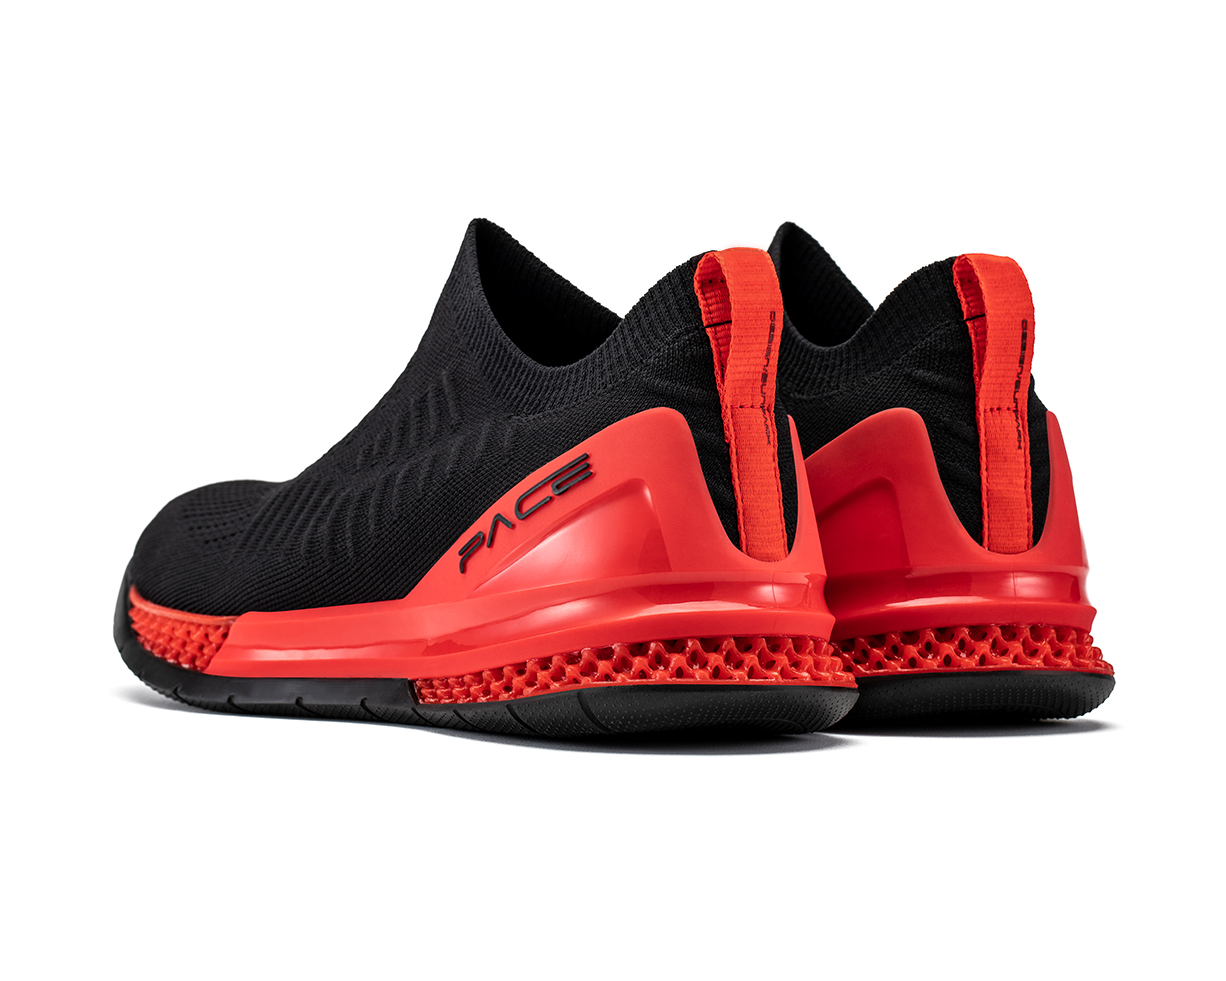 3D 打印实现量产 | Revo 塑成科技推出新一代 3D 打印运动鞋